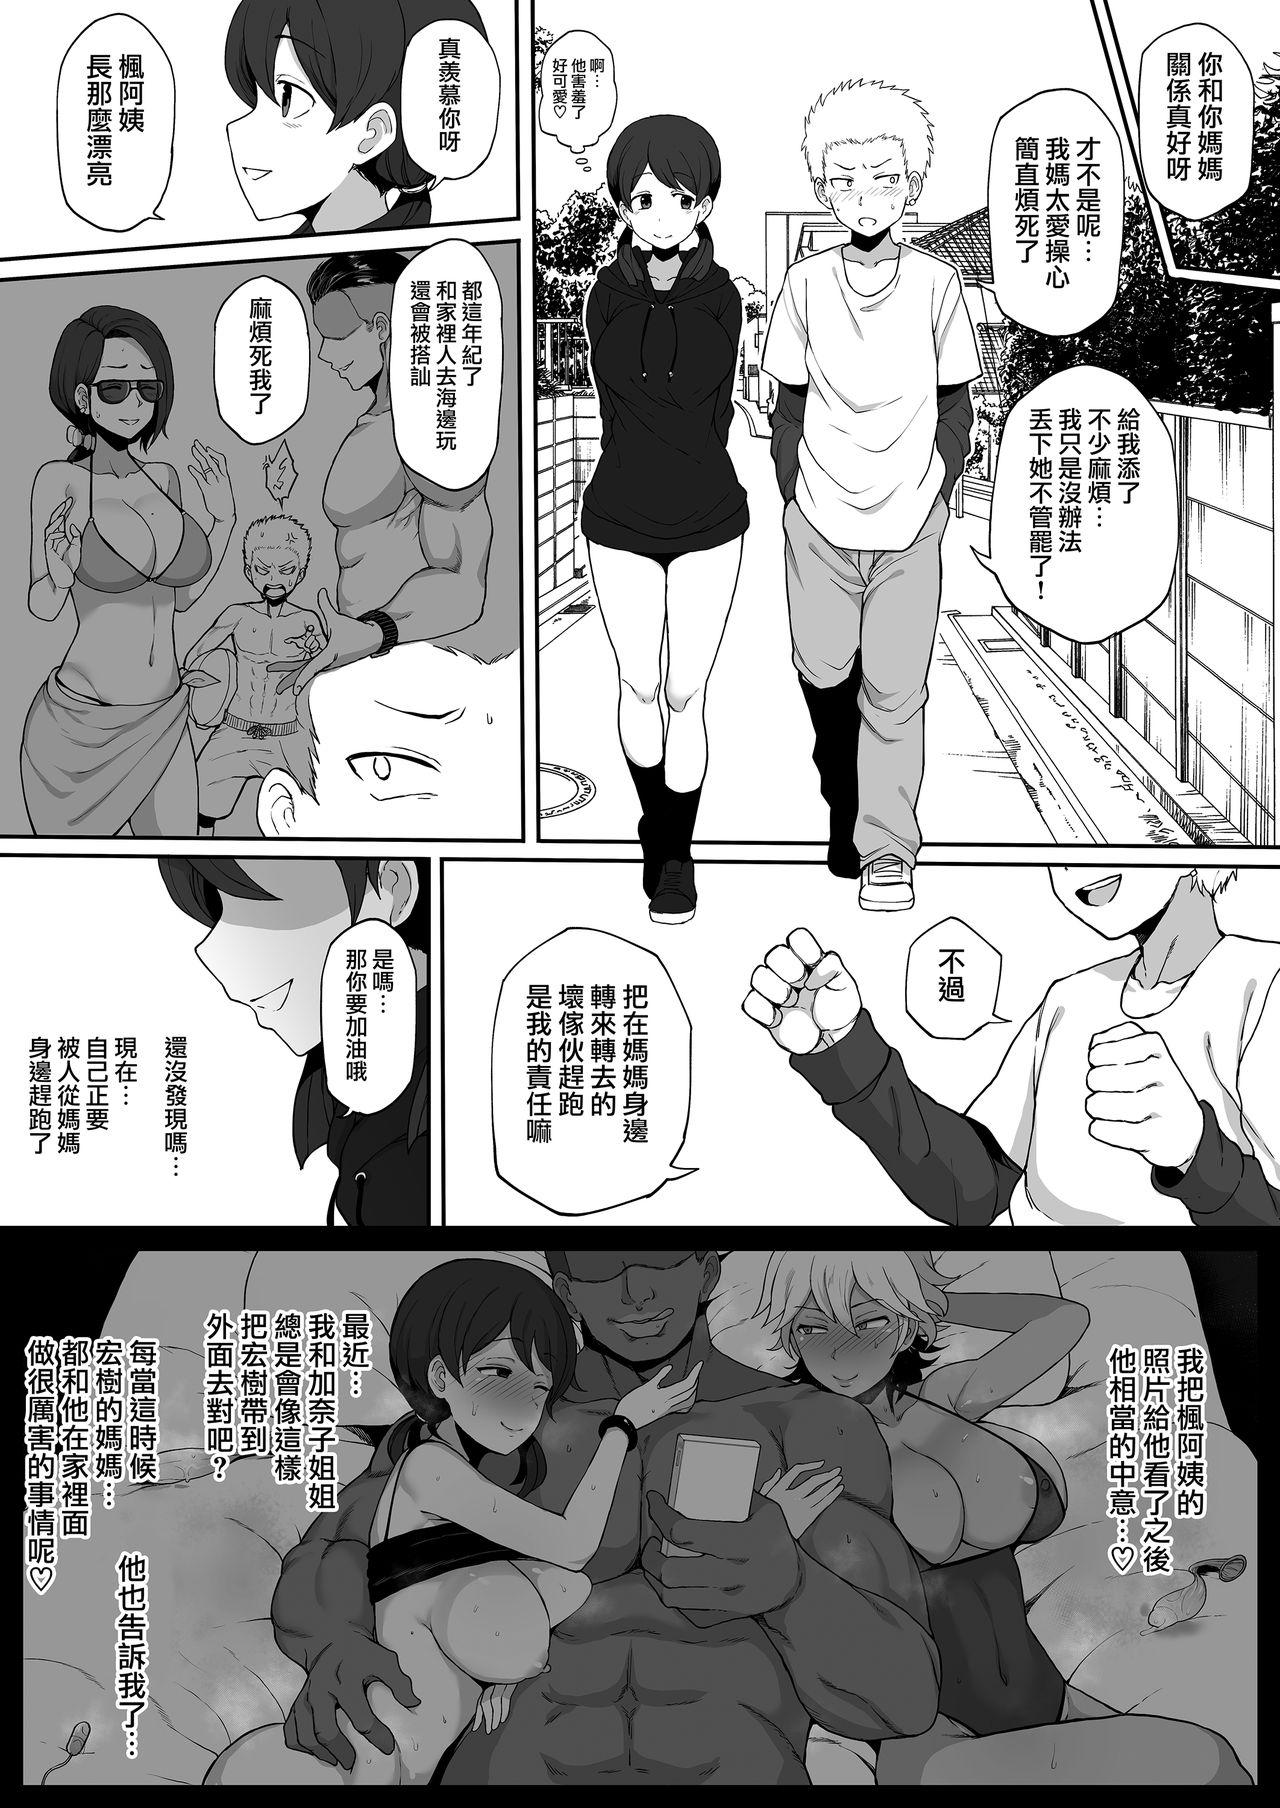 Kokujin no Tenkousei NTR ru Chapters 1-6 part 1 Plus Bonus chapter: Stolen Mother’s Breasts 12